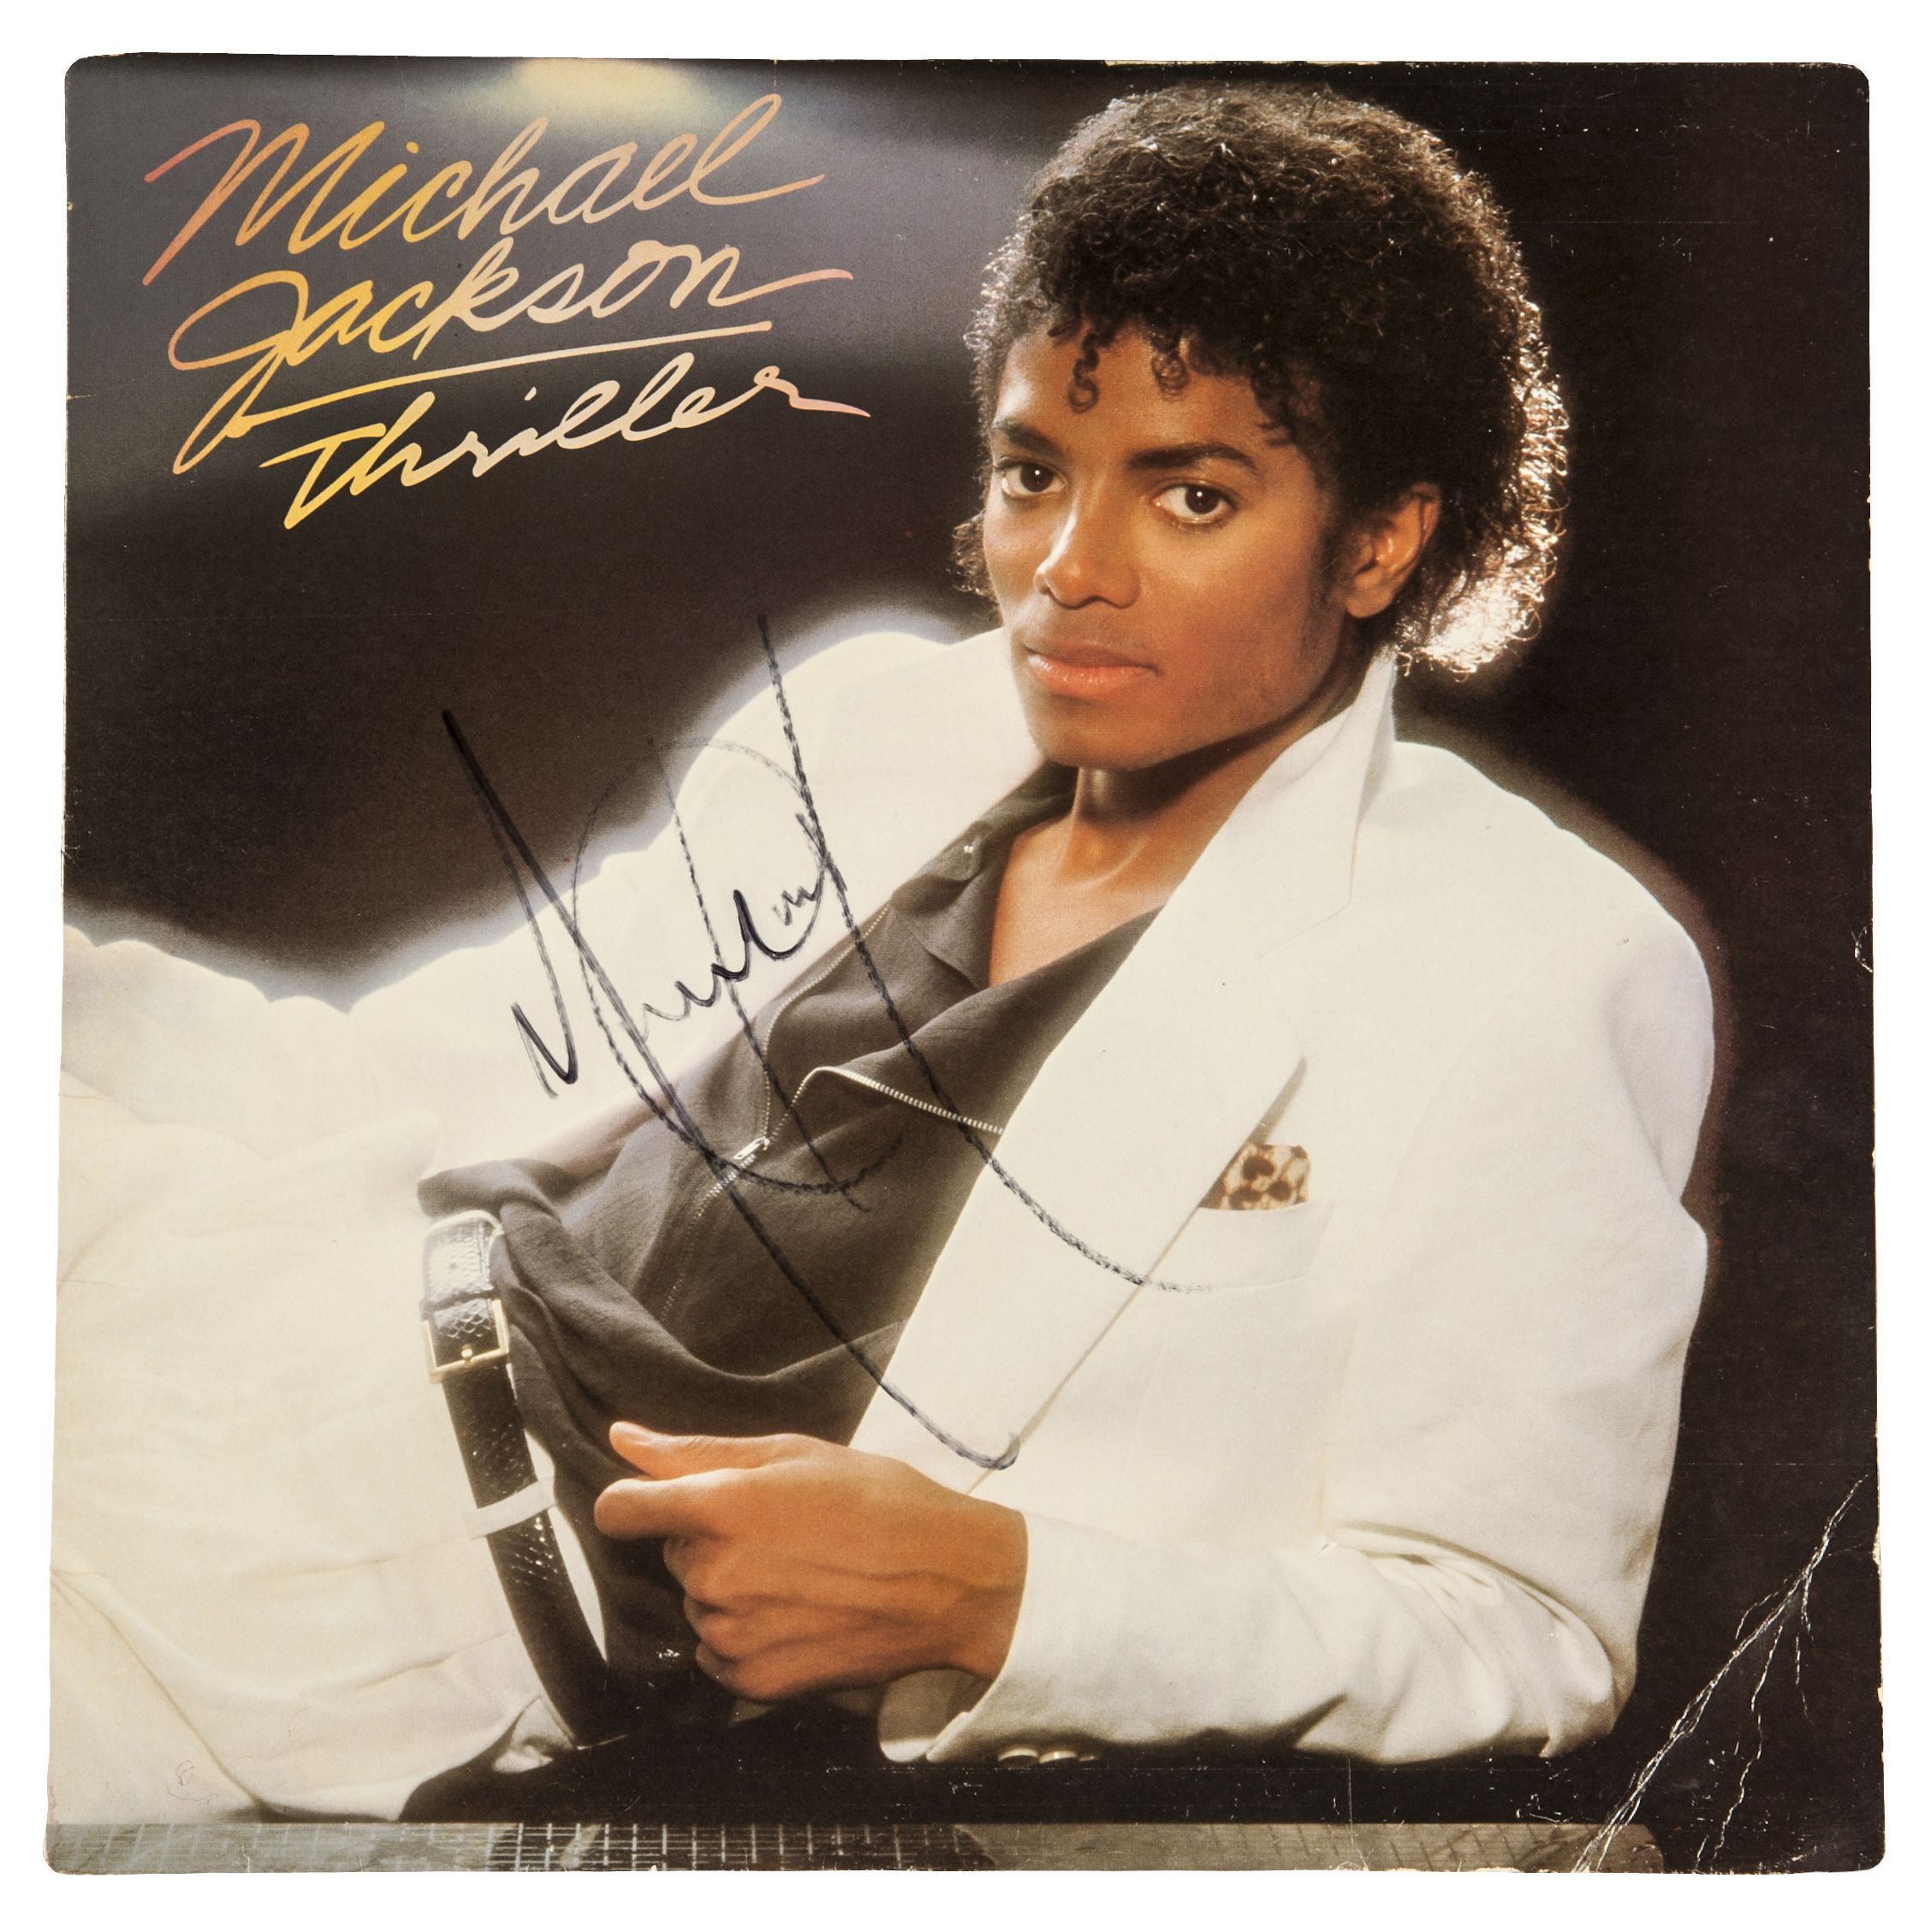 Michael jackson albums. Michael Jackson Thriller 1982. Michael Jackson Thriller album Cover. MJ Thriller album.